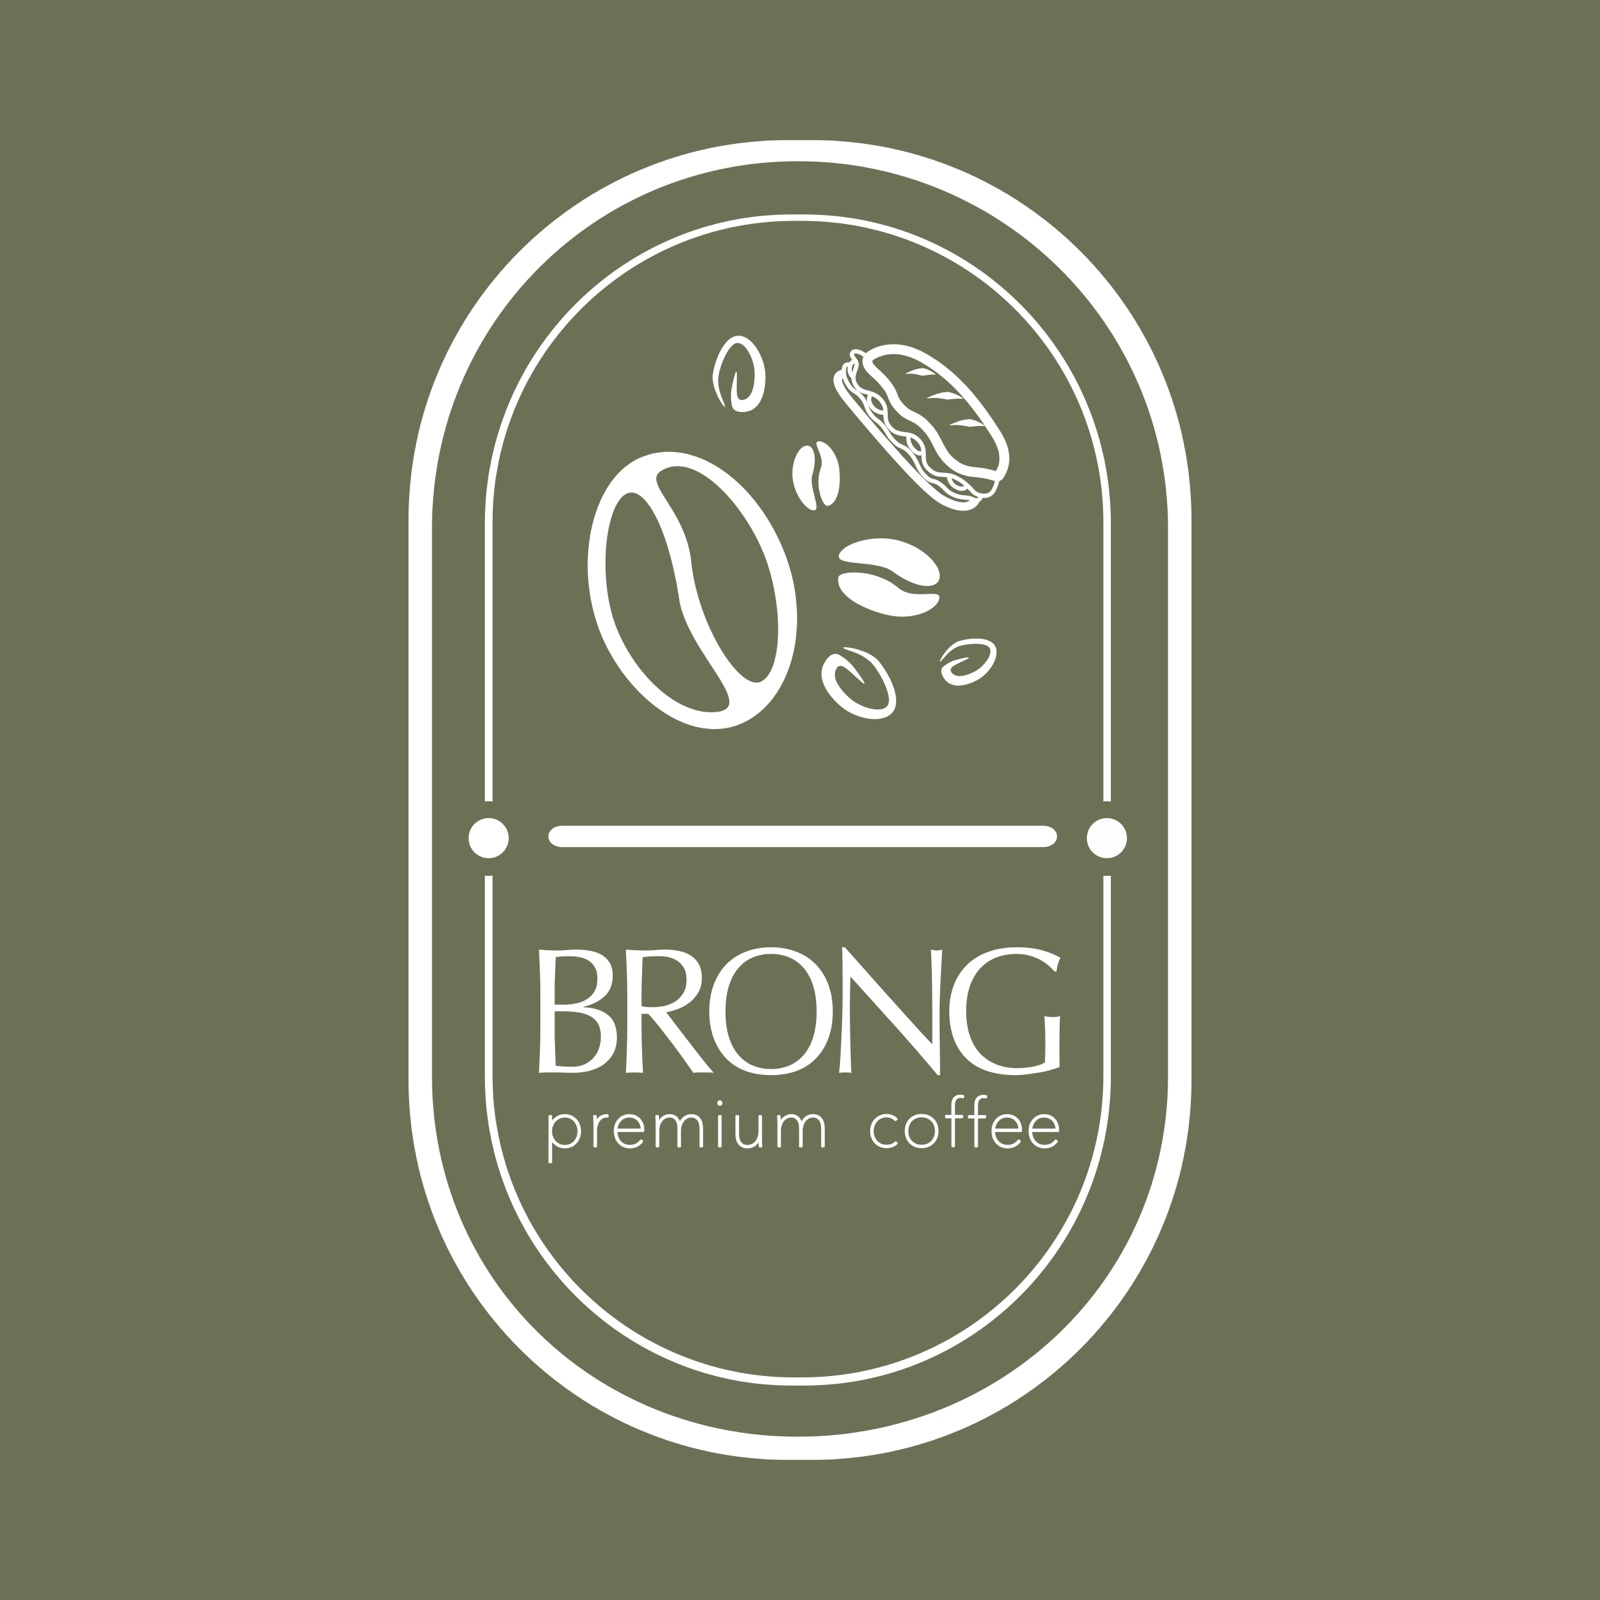 Brong Premium Coffee